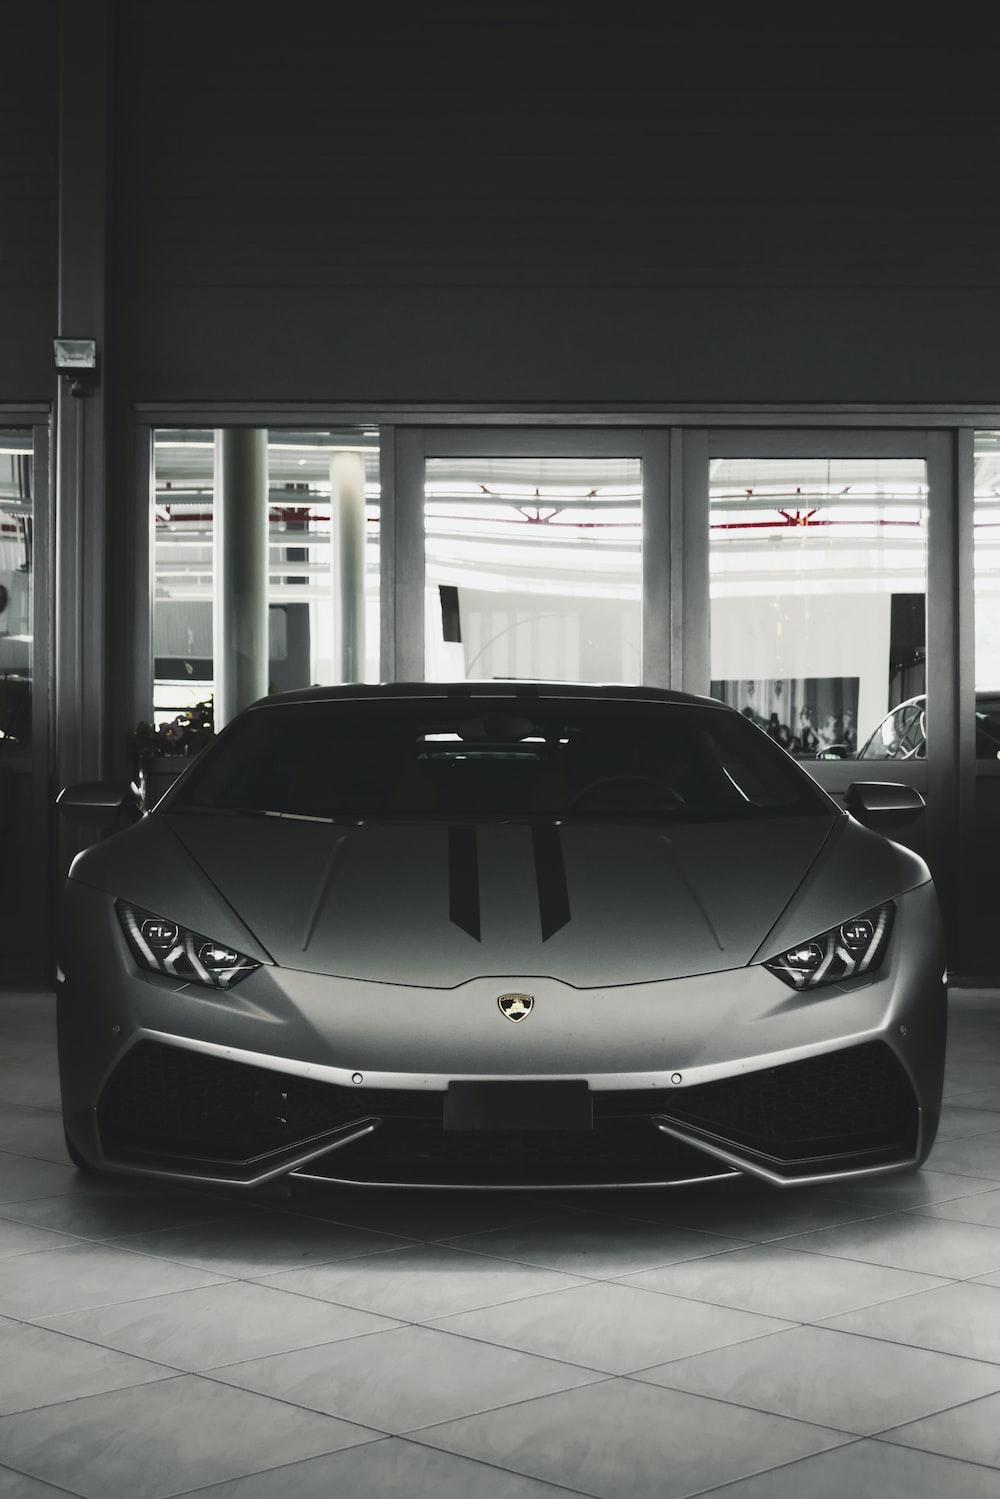 Lamborghini Wallpapers Free HD Download [500 HQ]